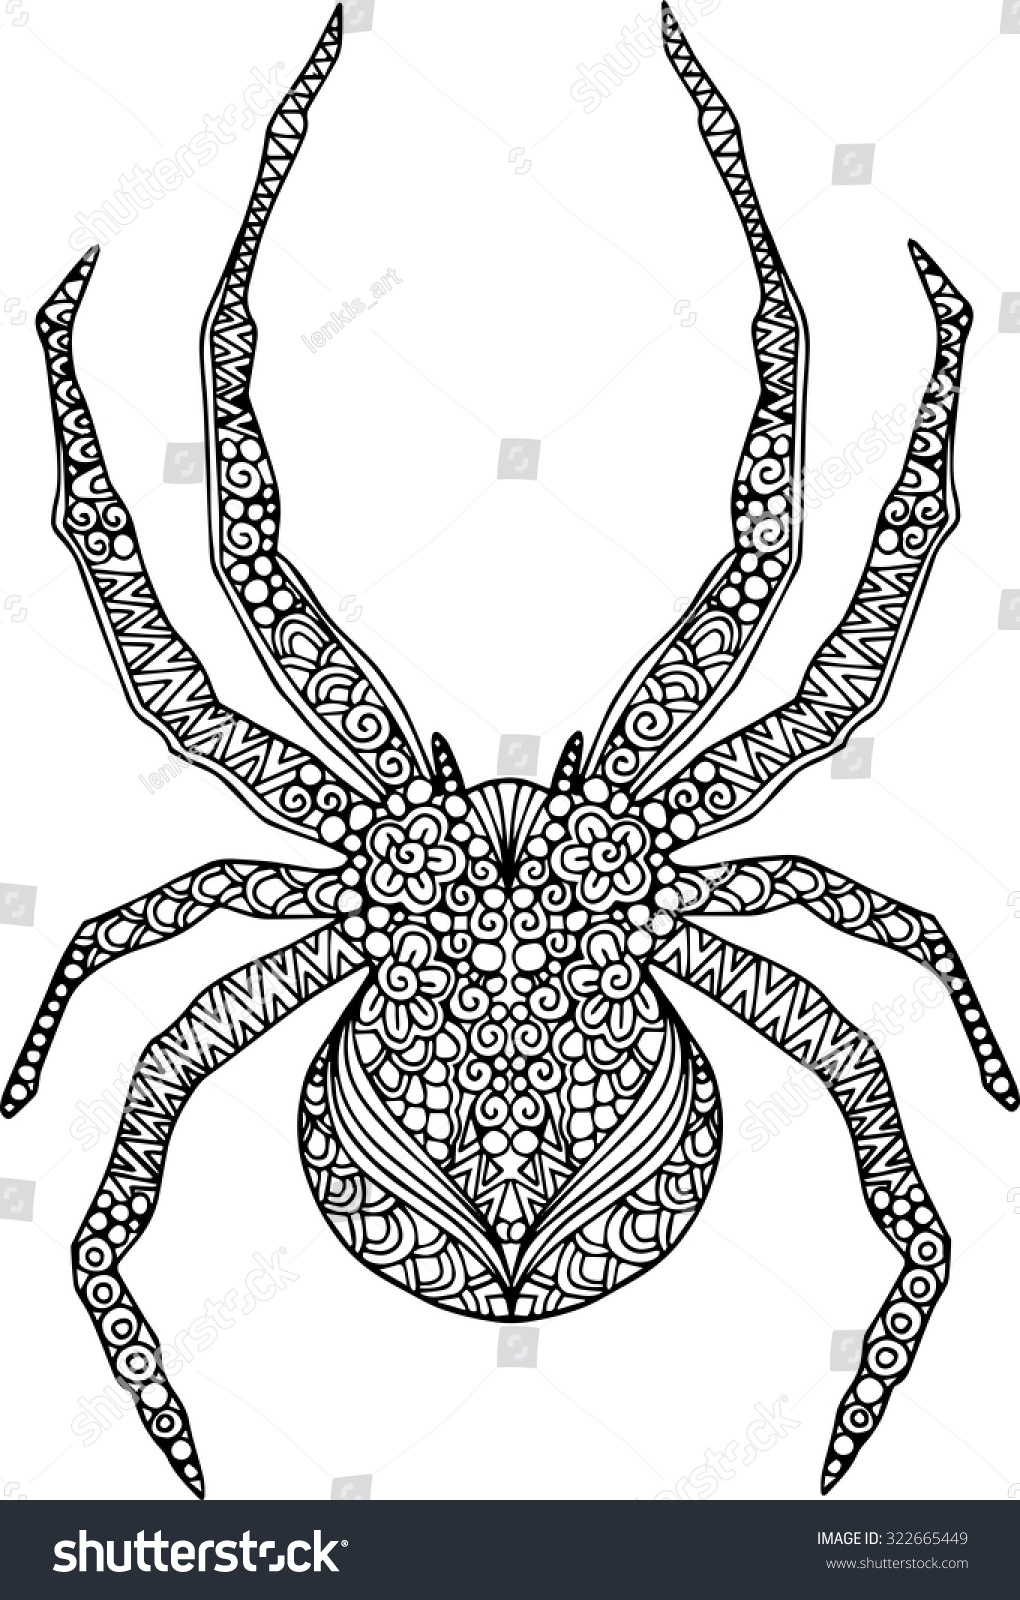 Hand Drawn Outline Doodle Spider Illustration Stock Vector 322665449 ...